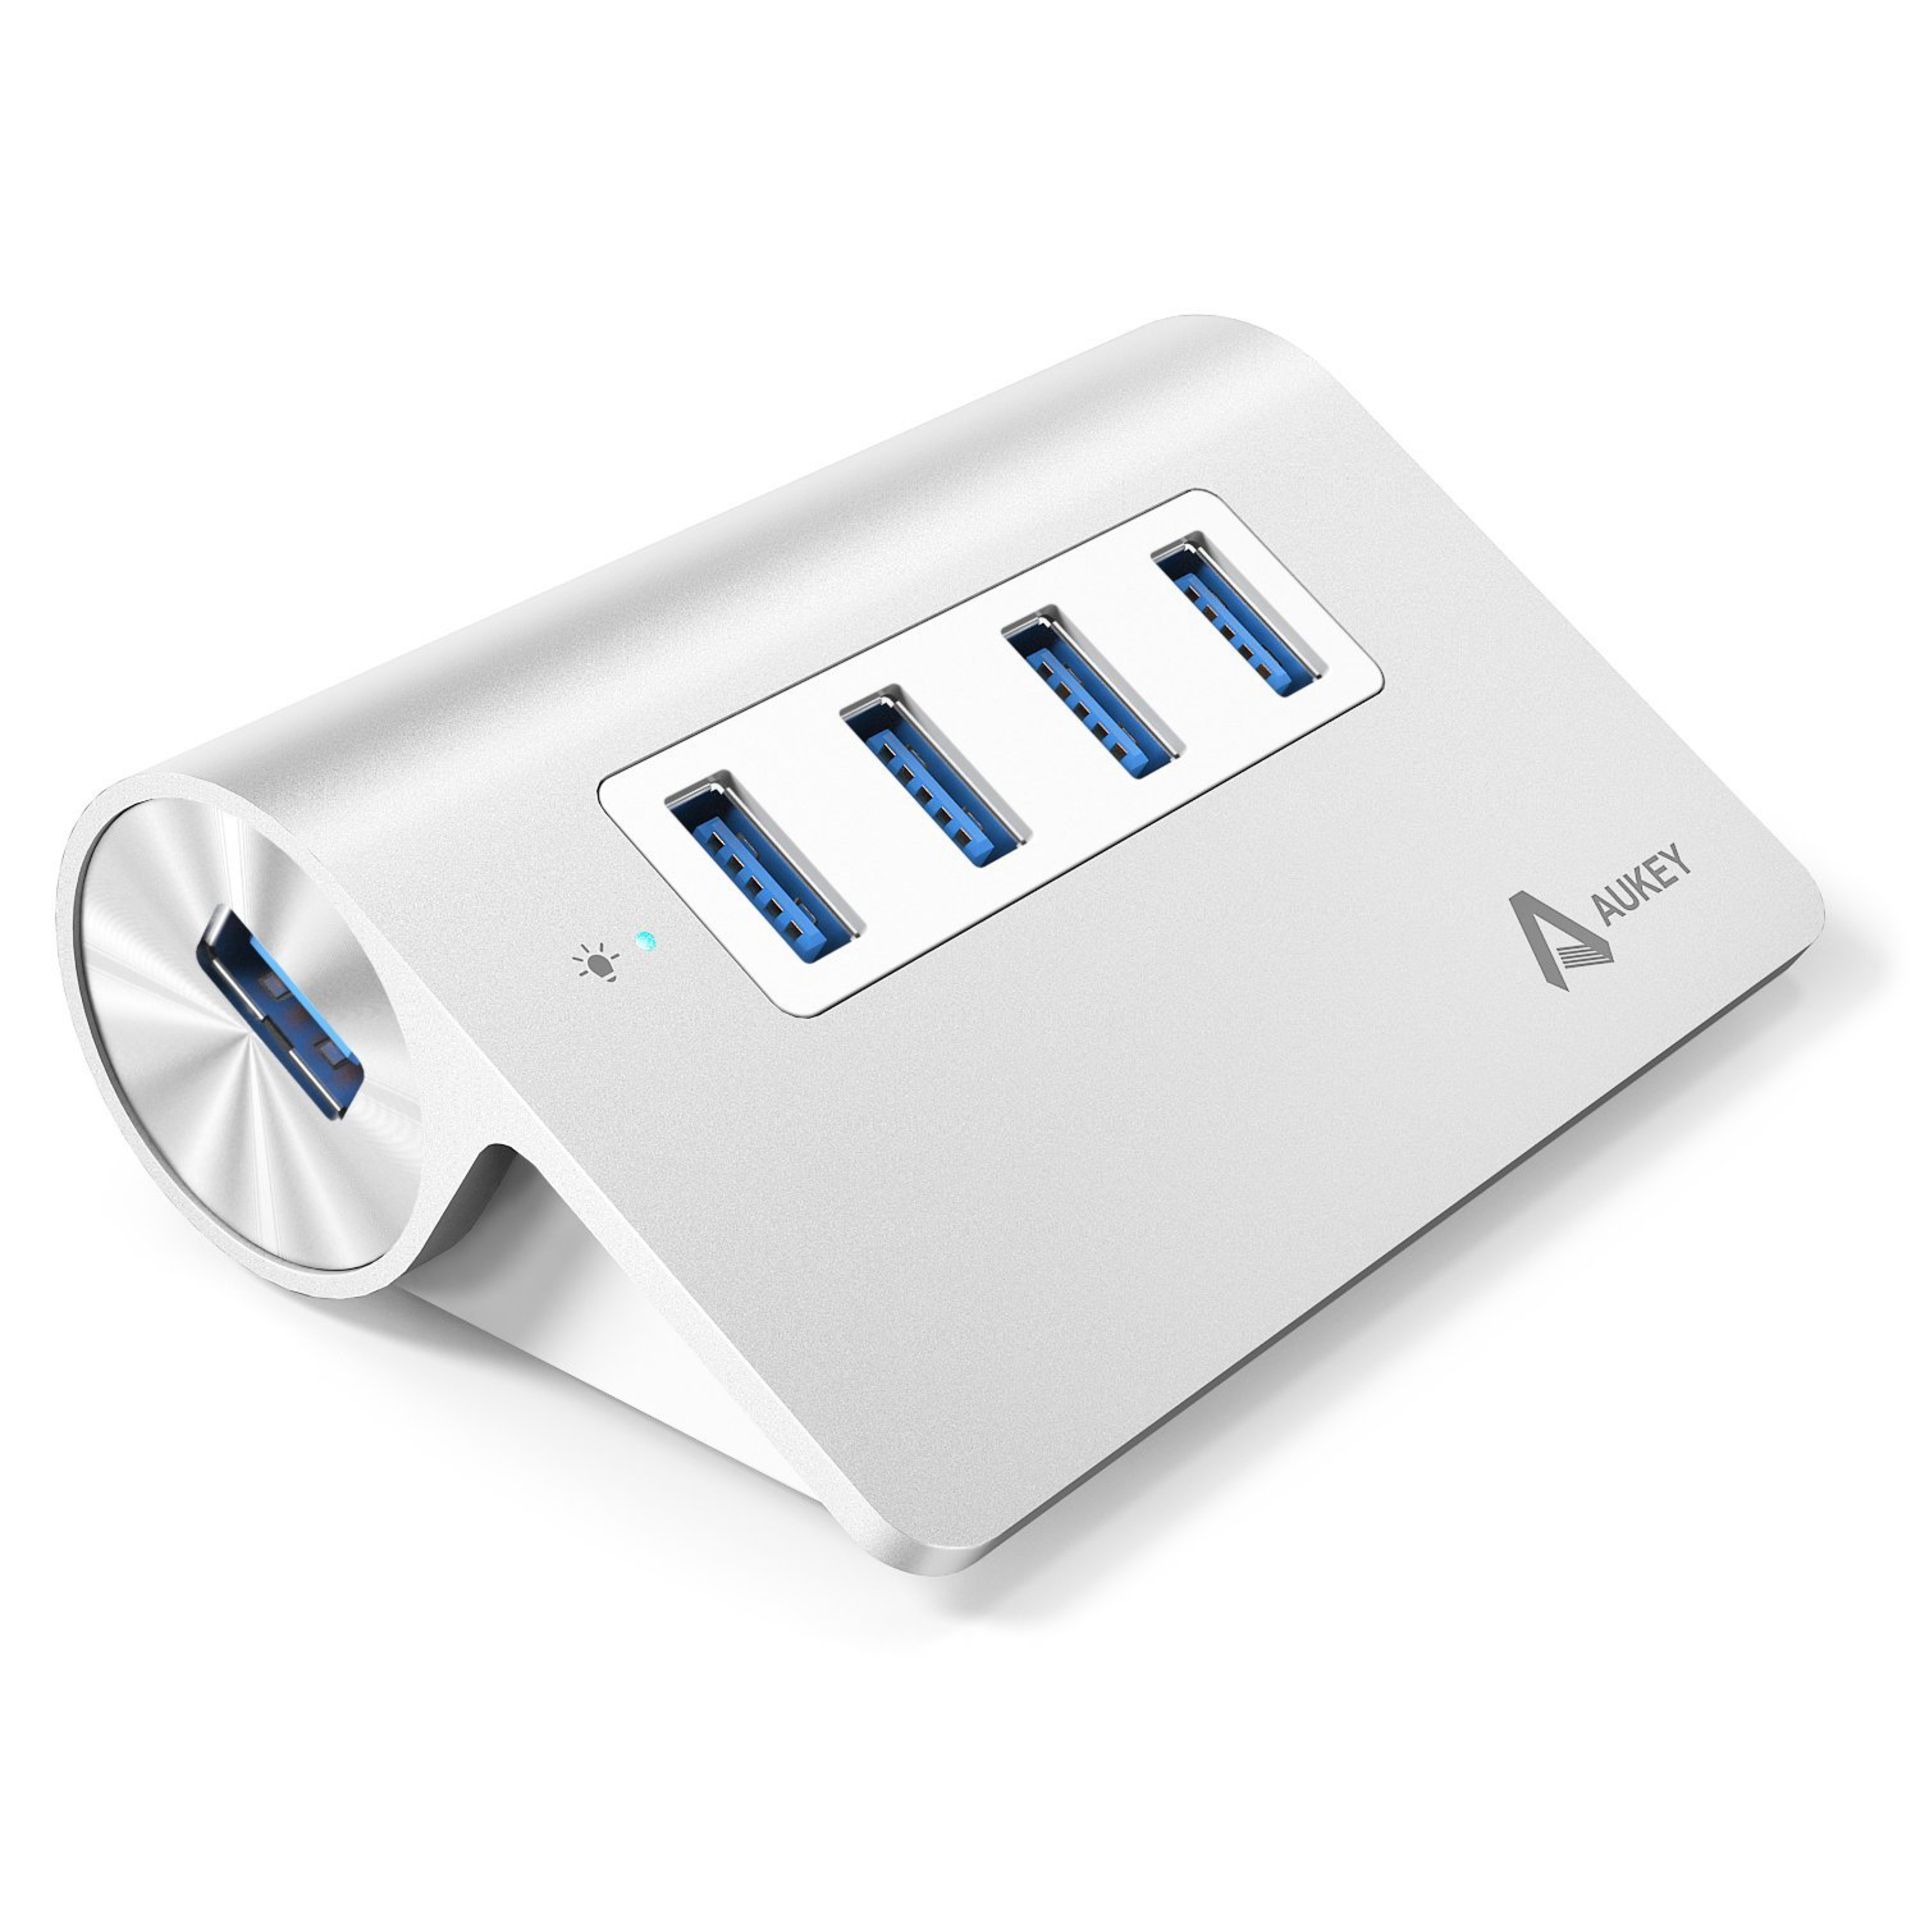 V Brand New Aukey Aluminum USB 3.0 4 Port Hub - Transfer Rates up to 5Gbps Amazon Price - £13.79